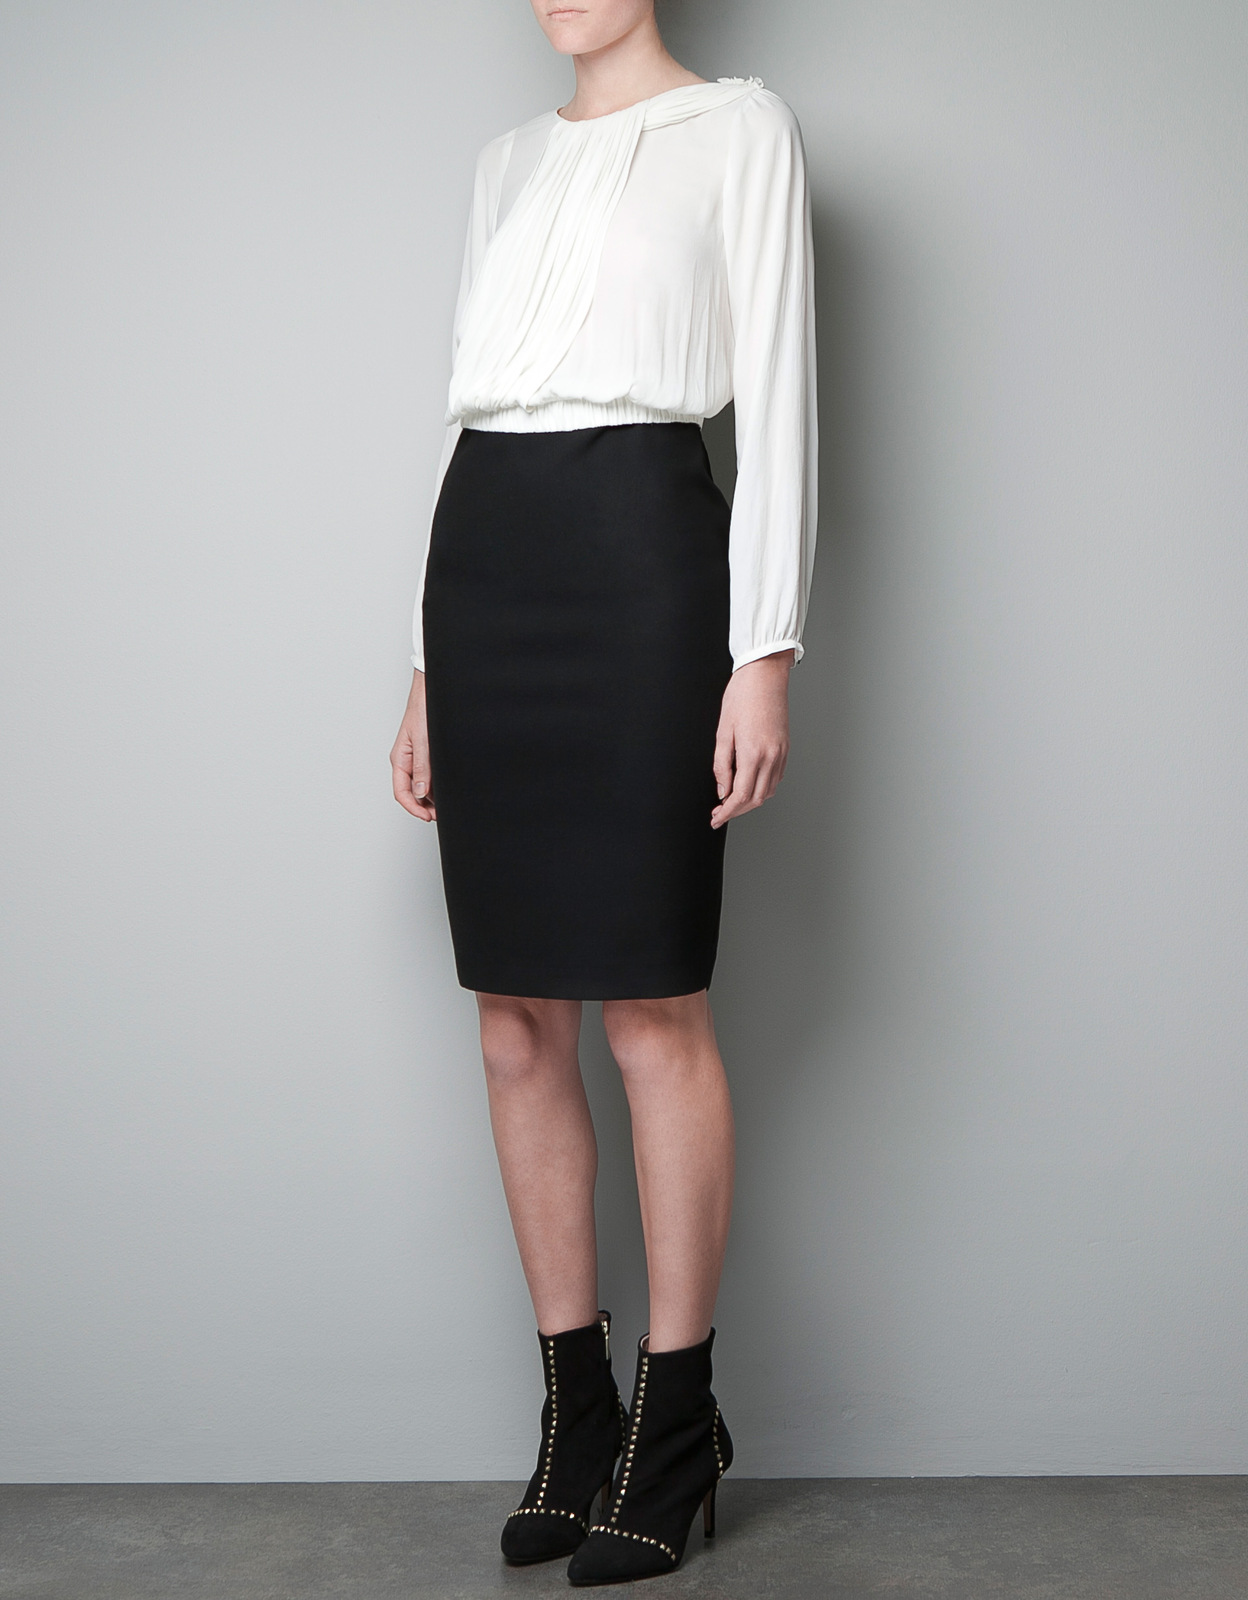 Zara fekete-fehér ruha fotója